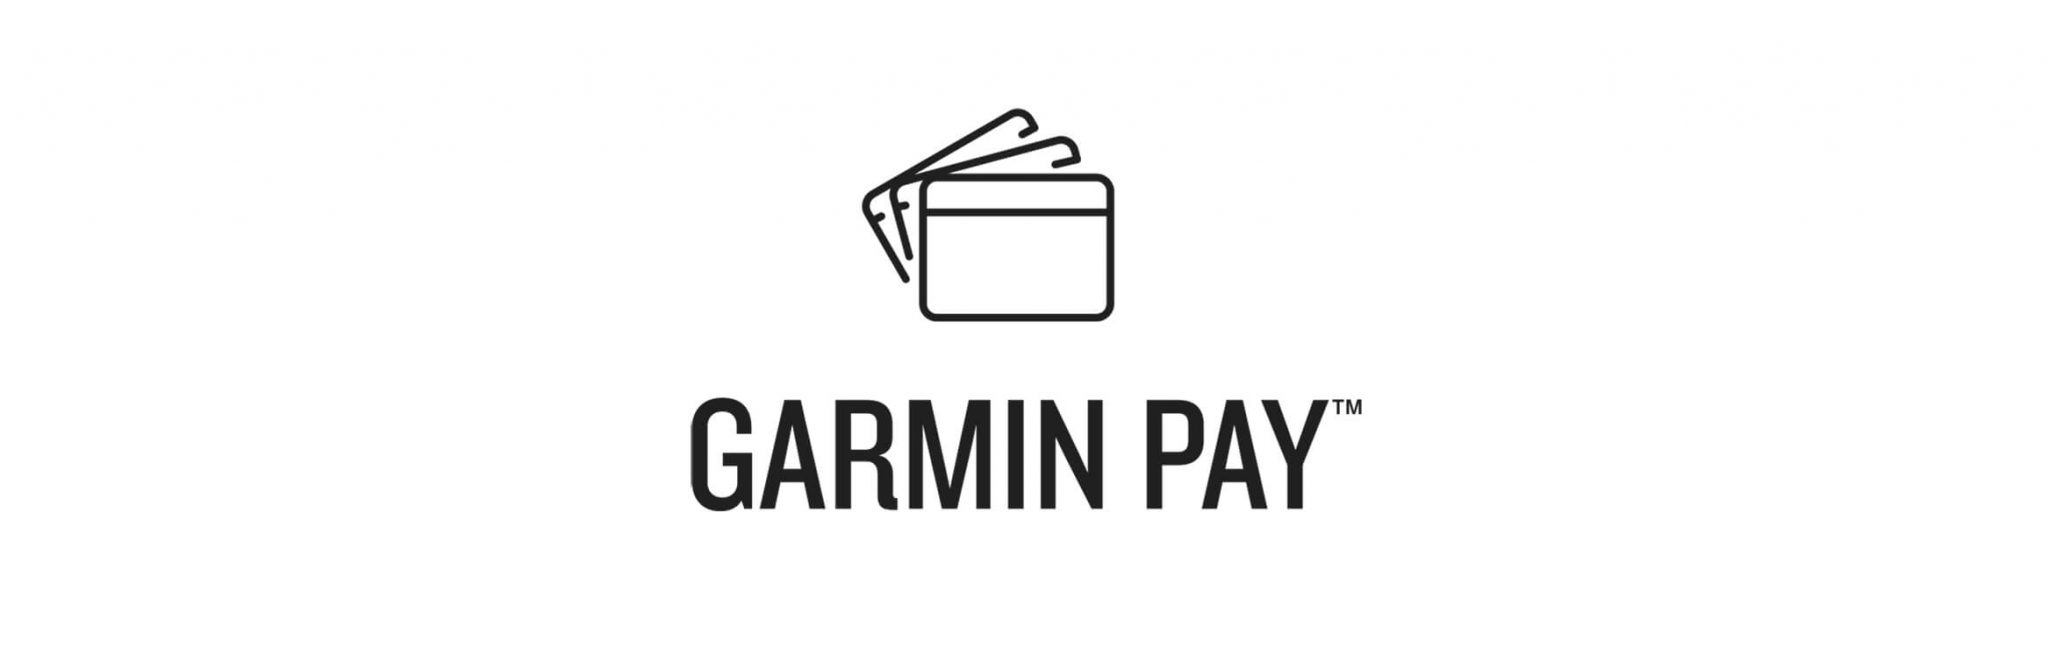 mobile_wallets_garmin_pay.jpg